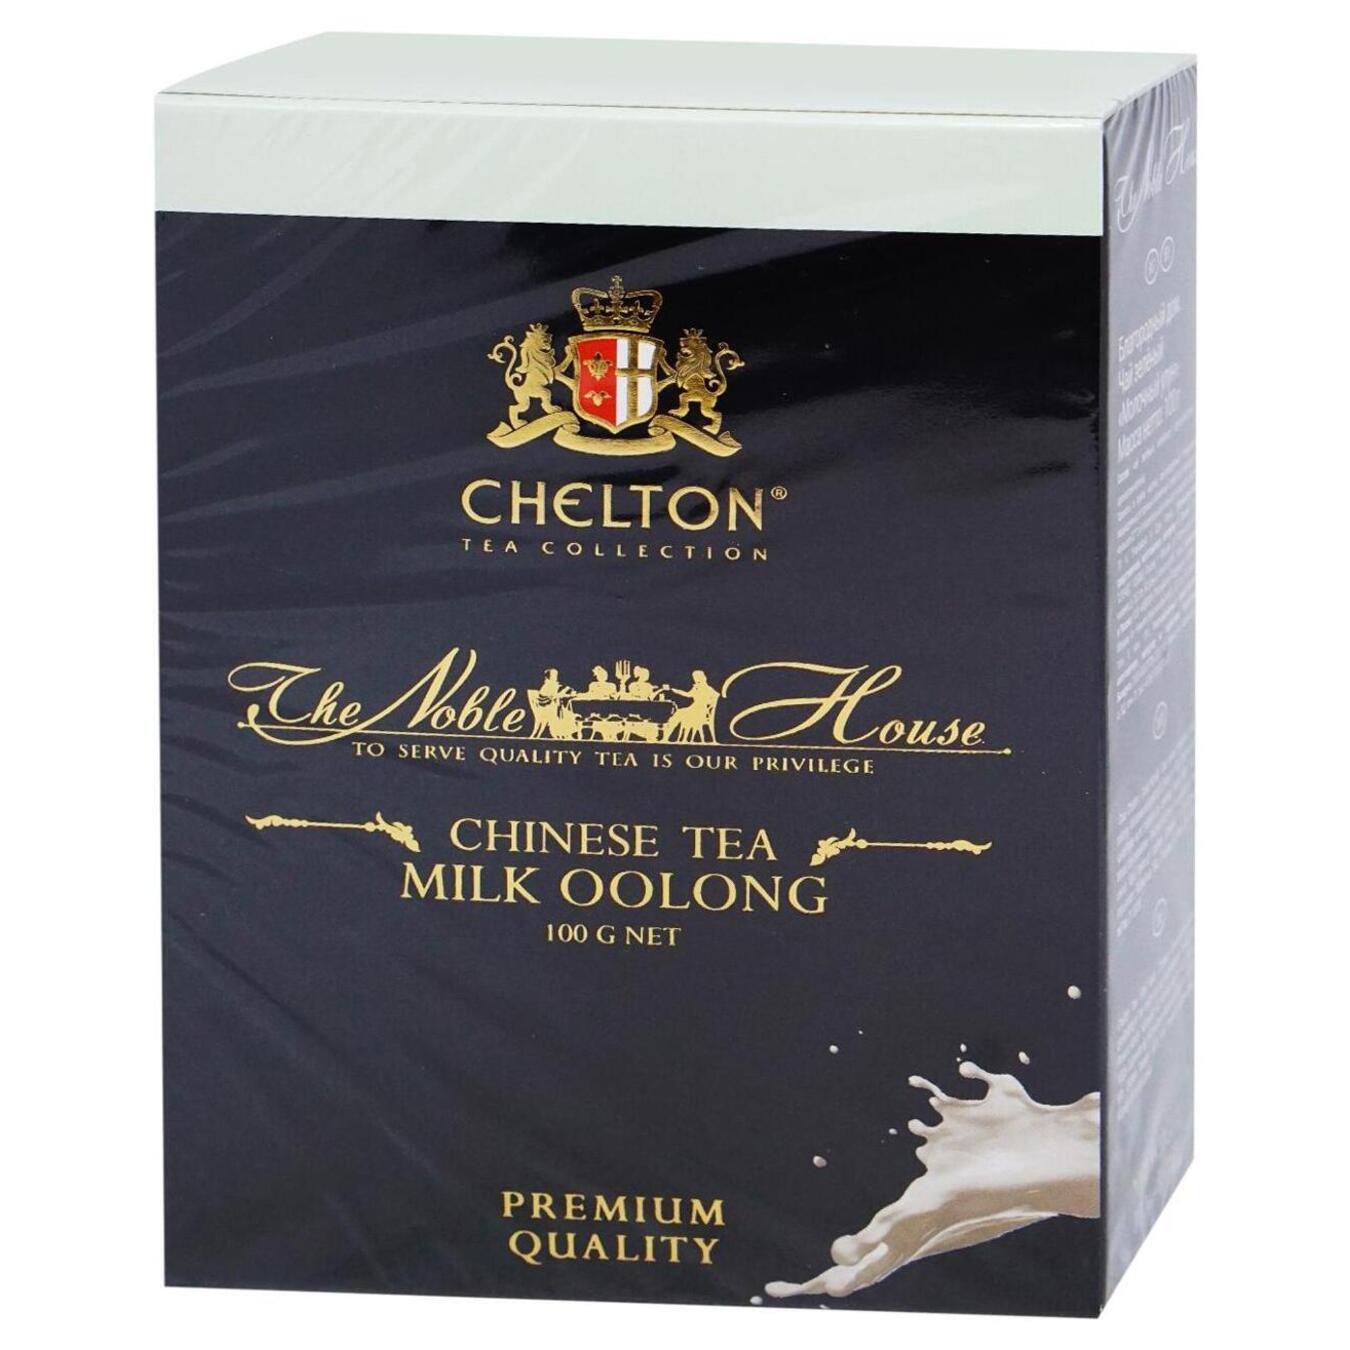 Green tea Chelton Noble House Milk oolong 100g